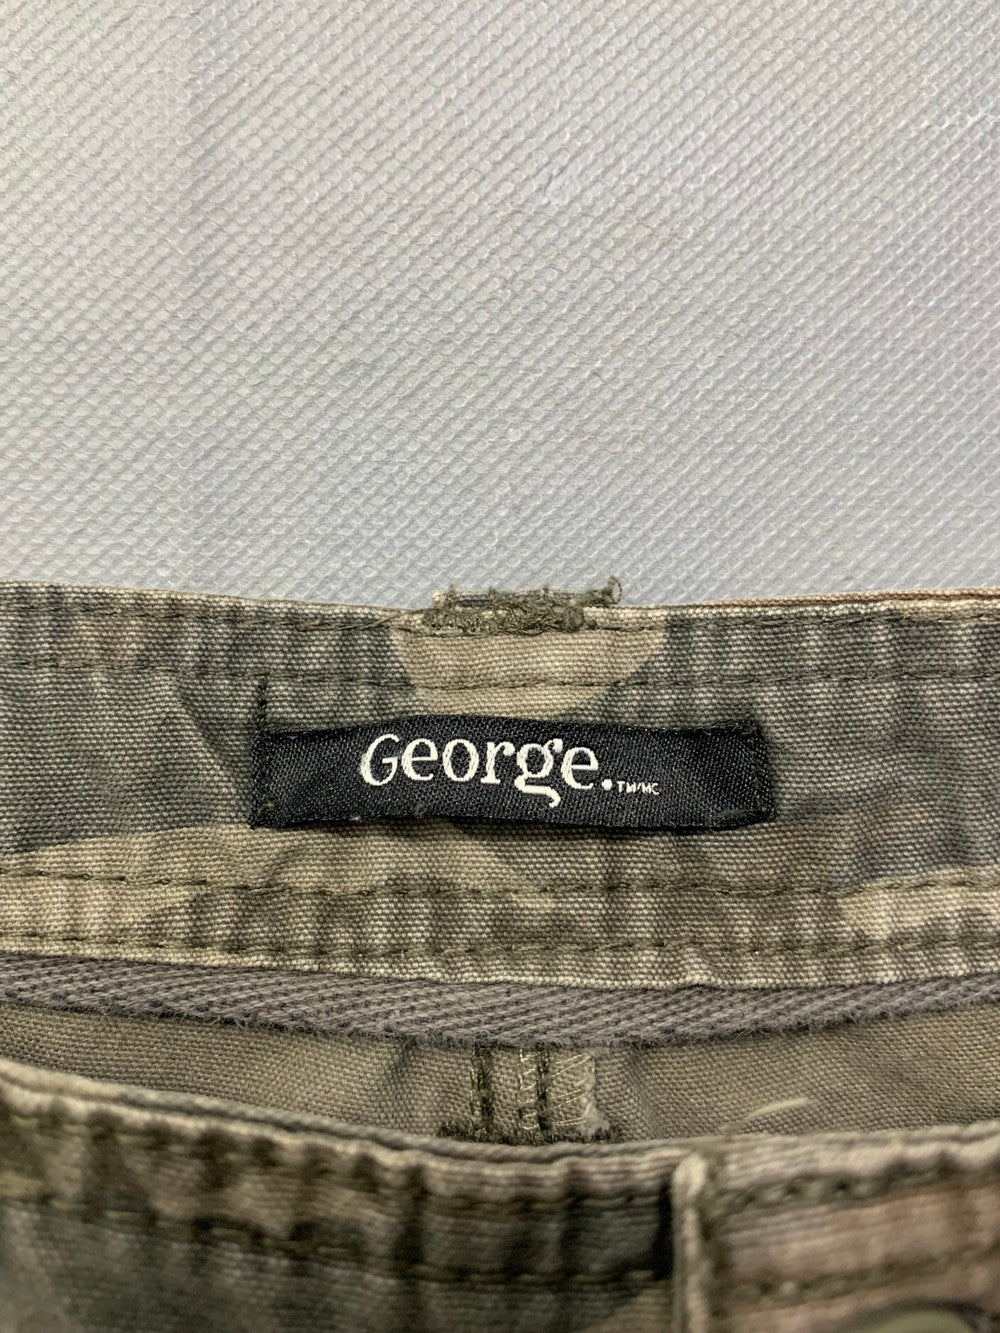 George Branded Original Cotton For Men Cargo Pant